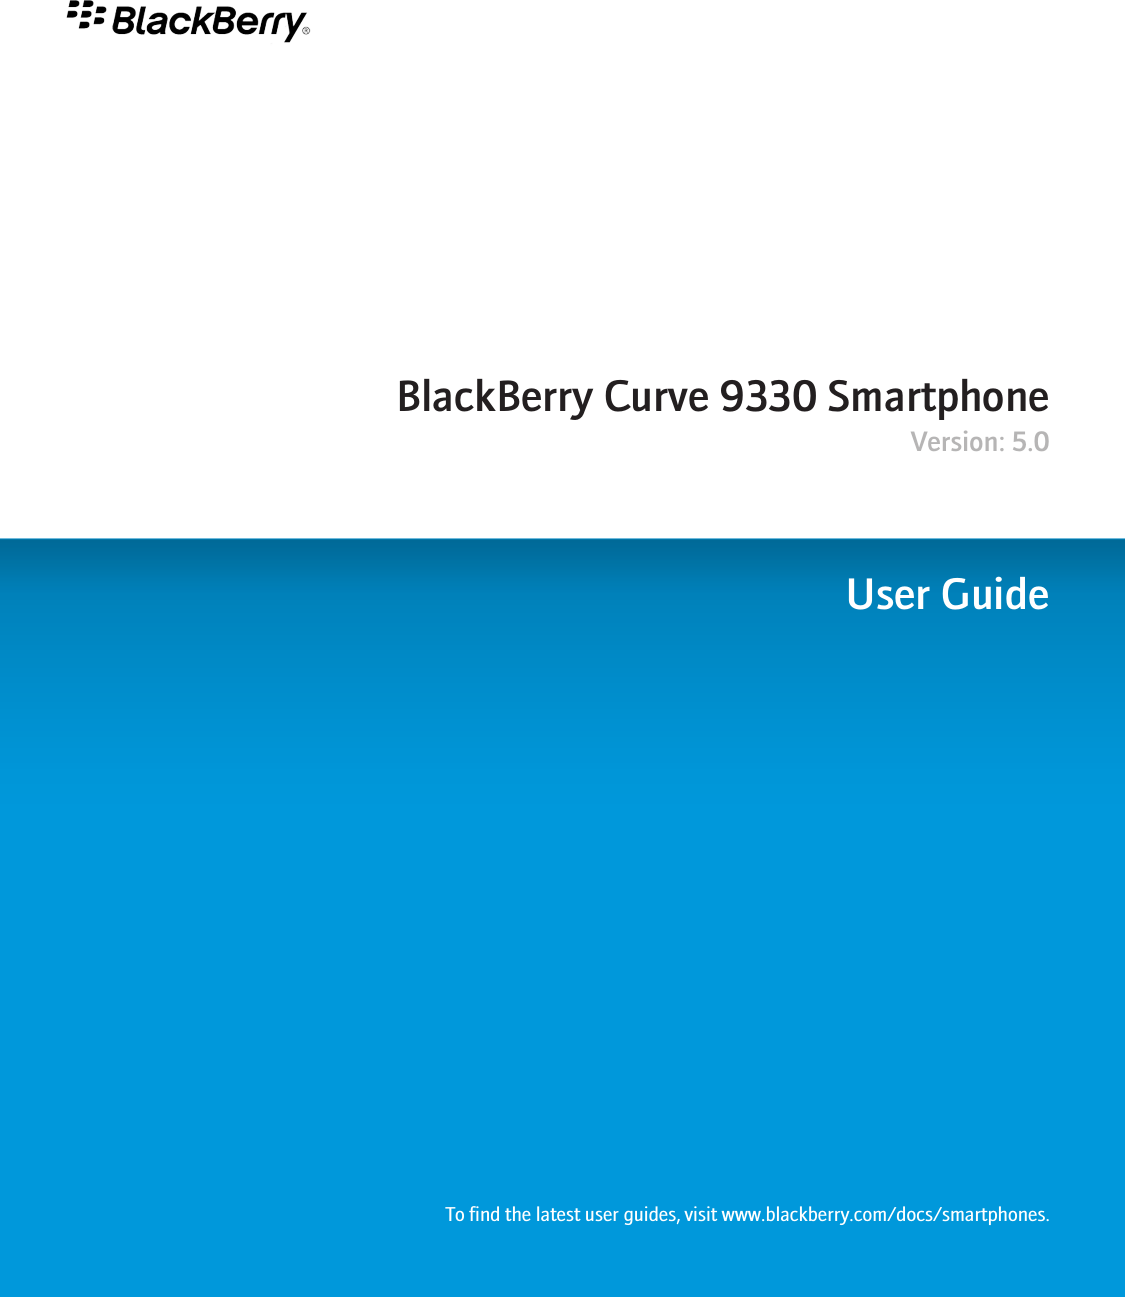 BlackBerry Curve 9330 SmartphoneVersion: 5.0User GuideTo find the latest user guides, visit www.blackberry.com/docs/smartphones.